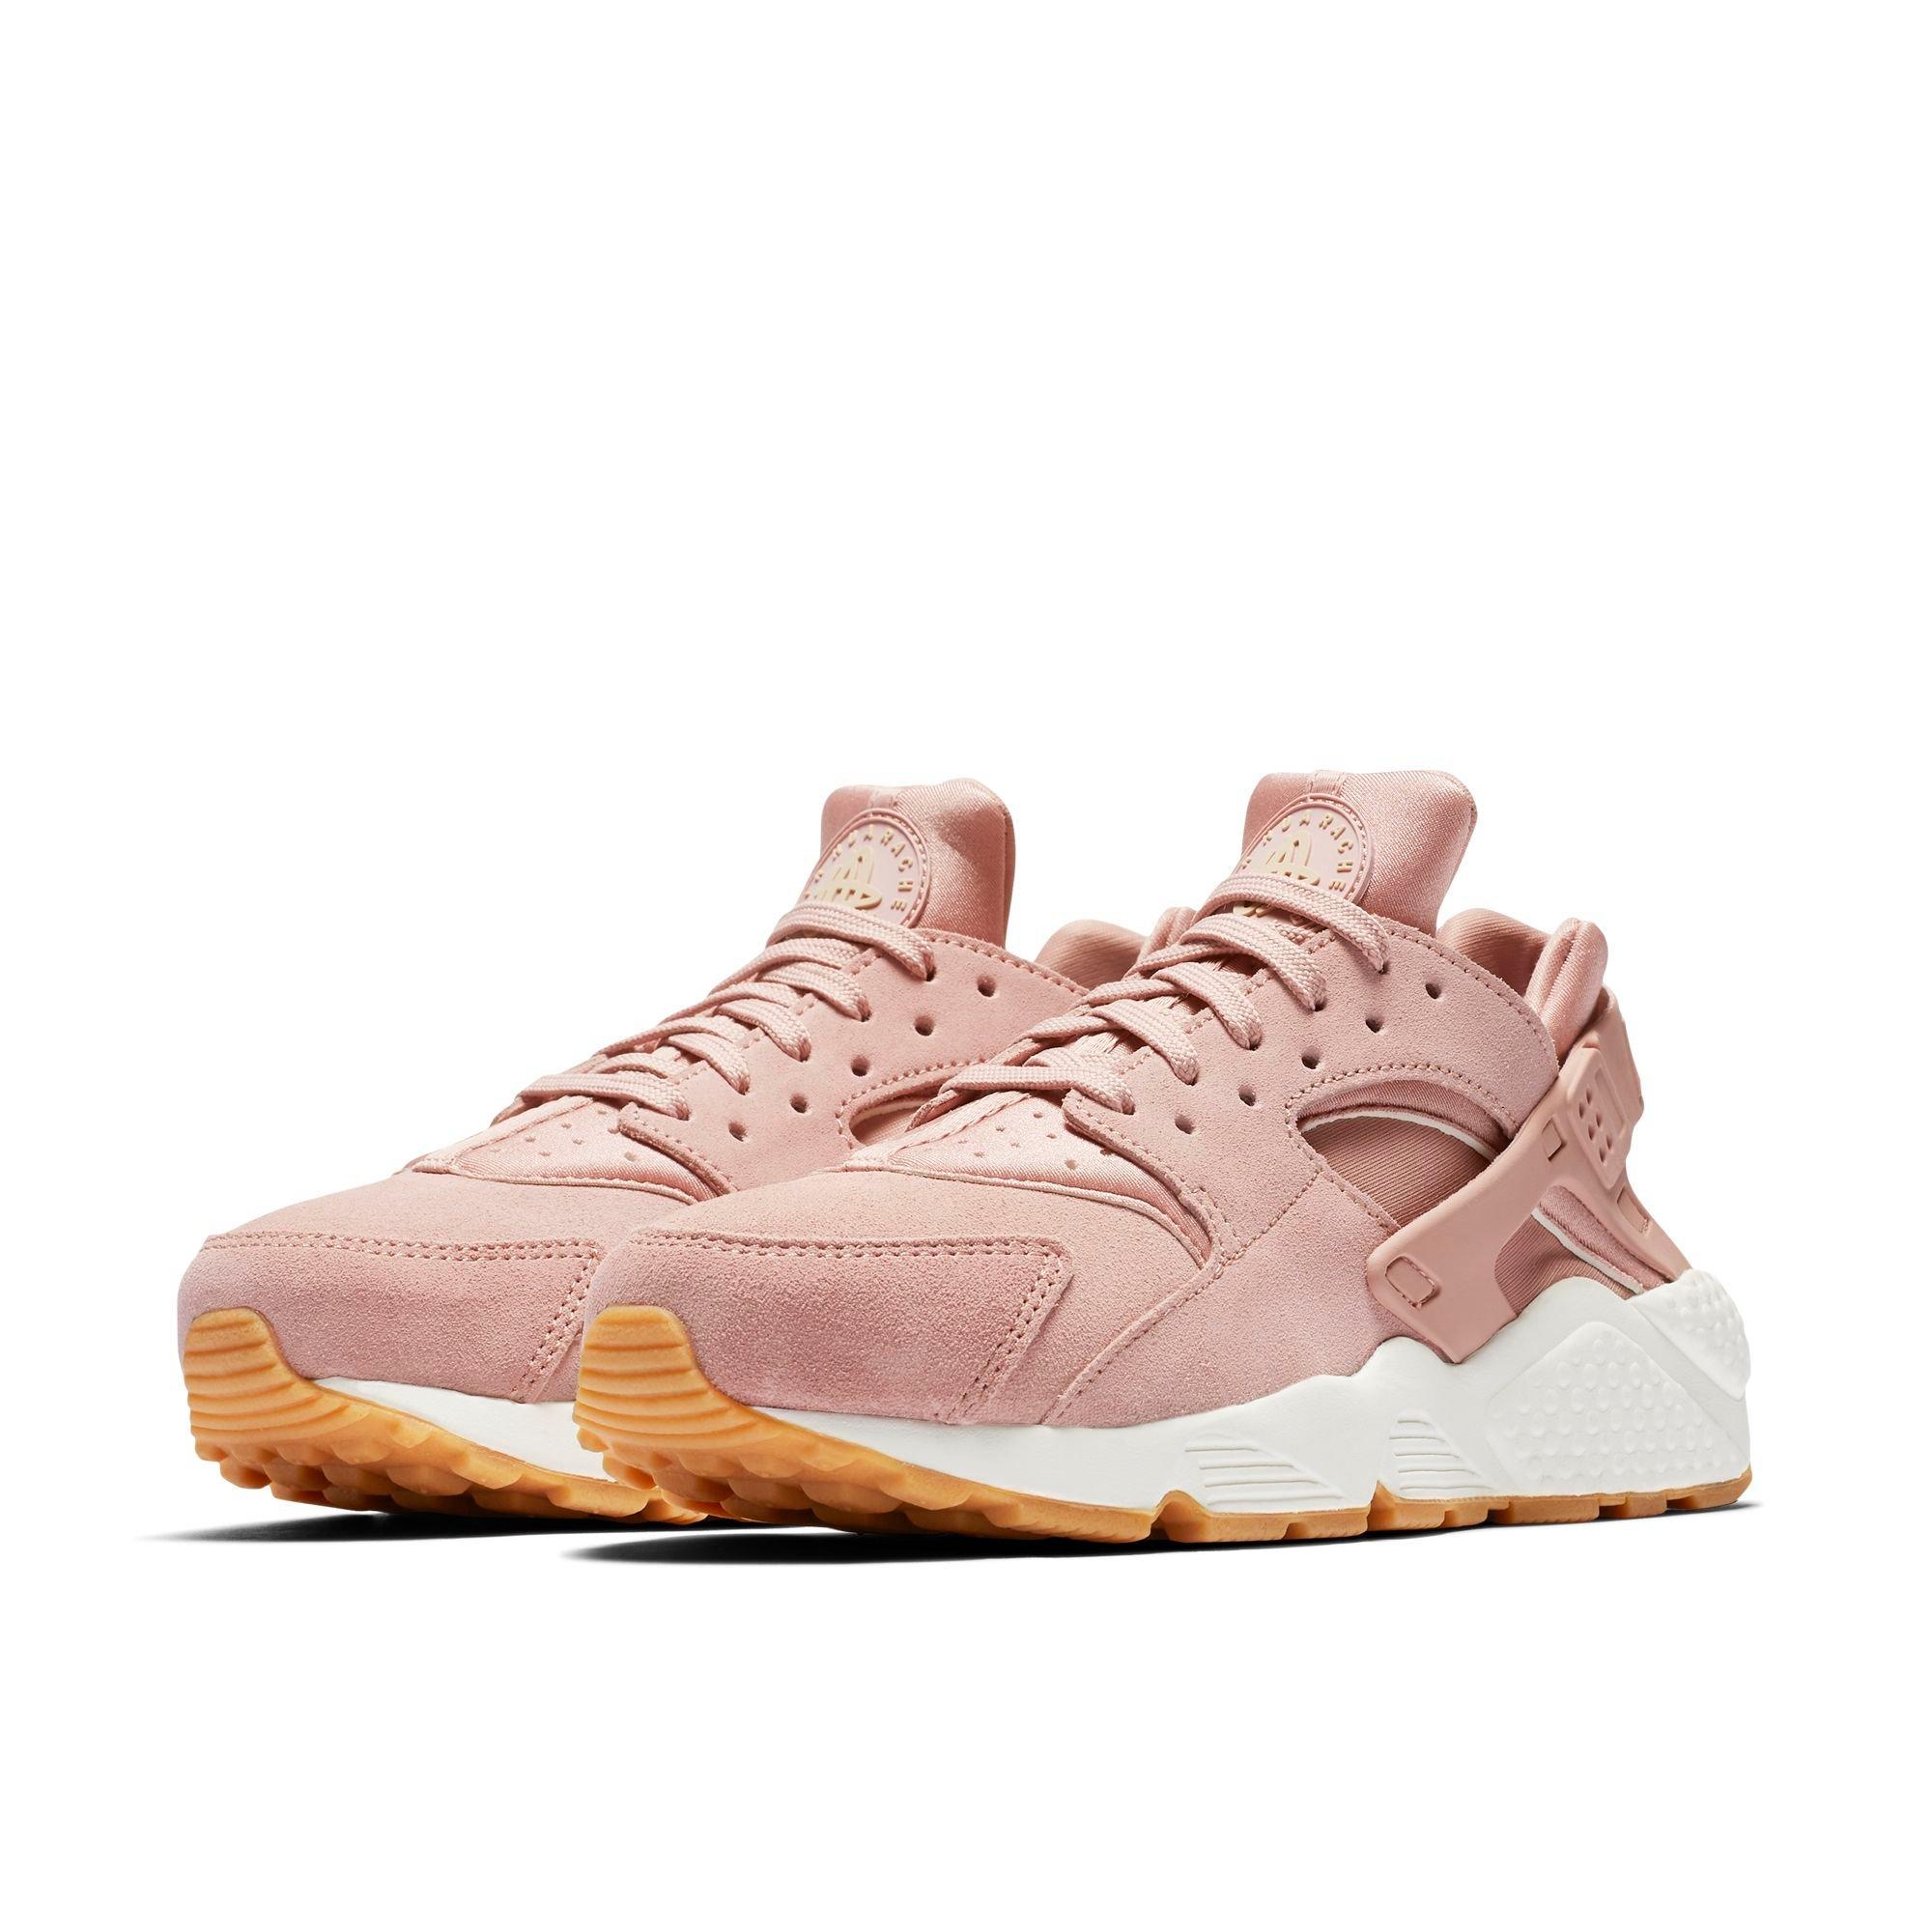 pink huarache sneakers